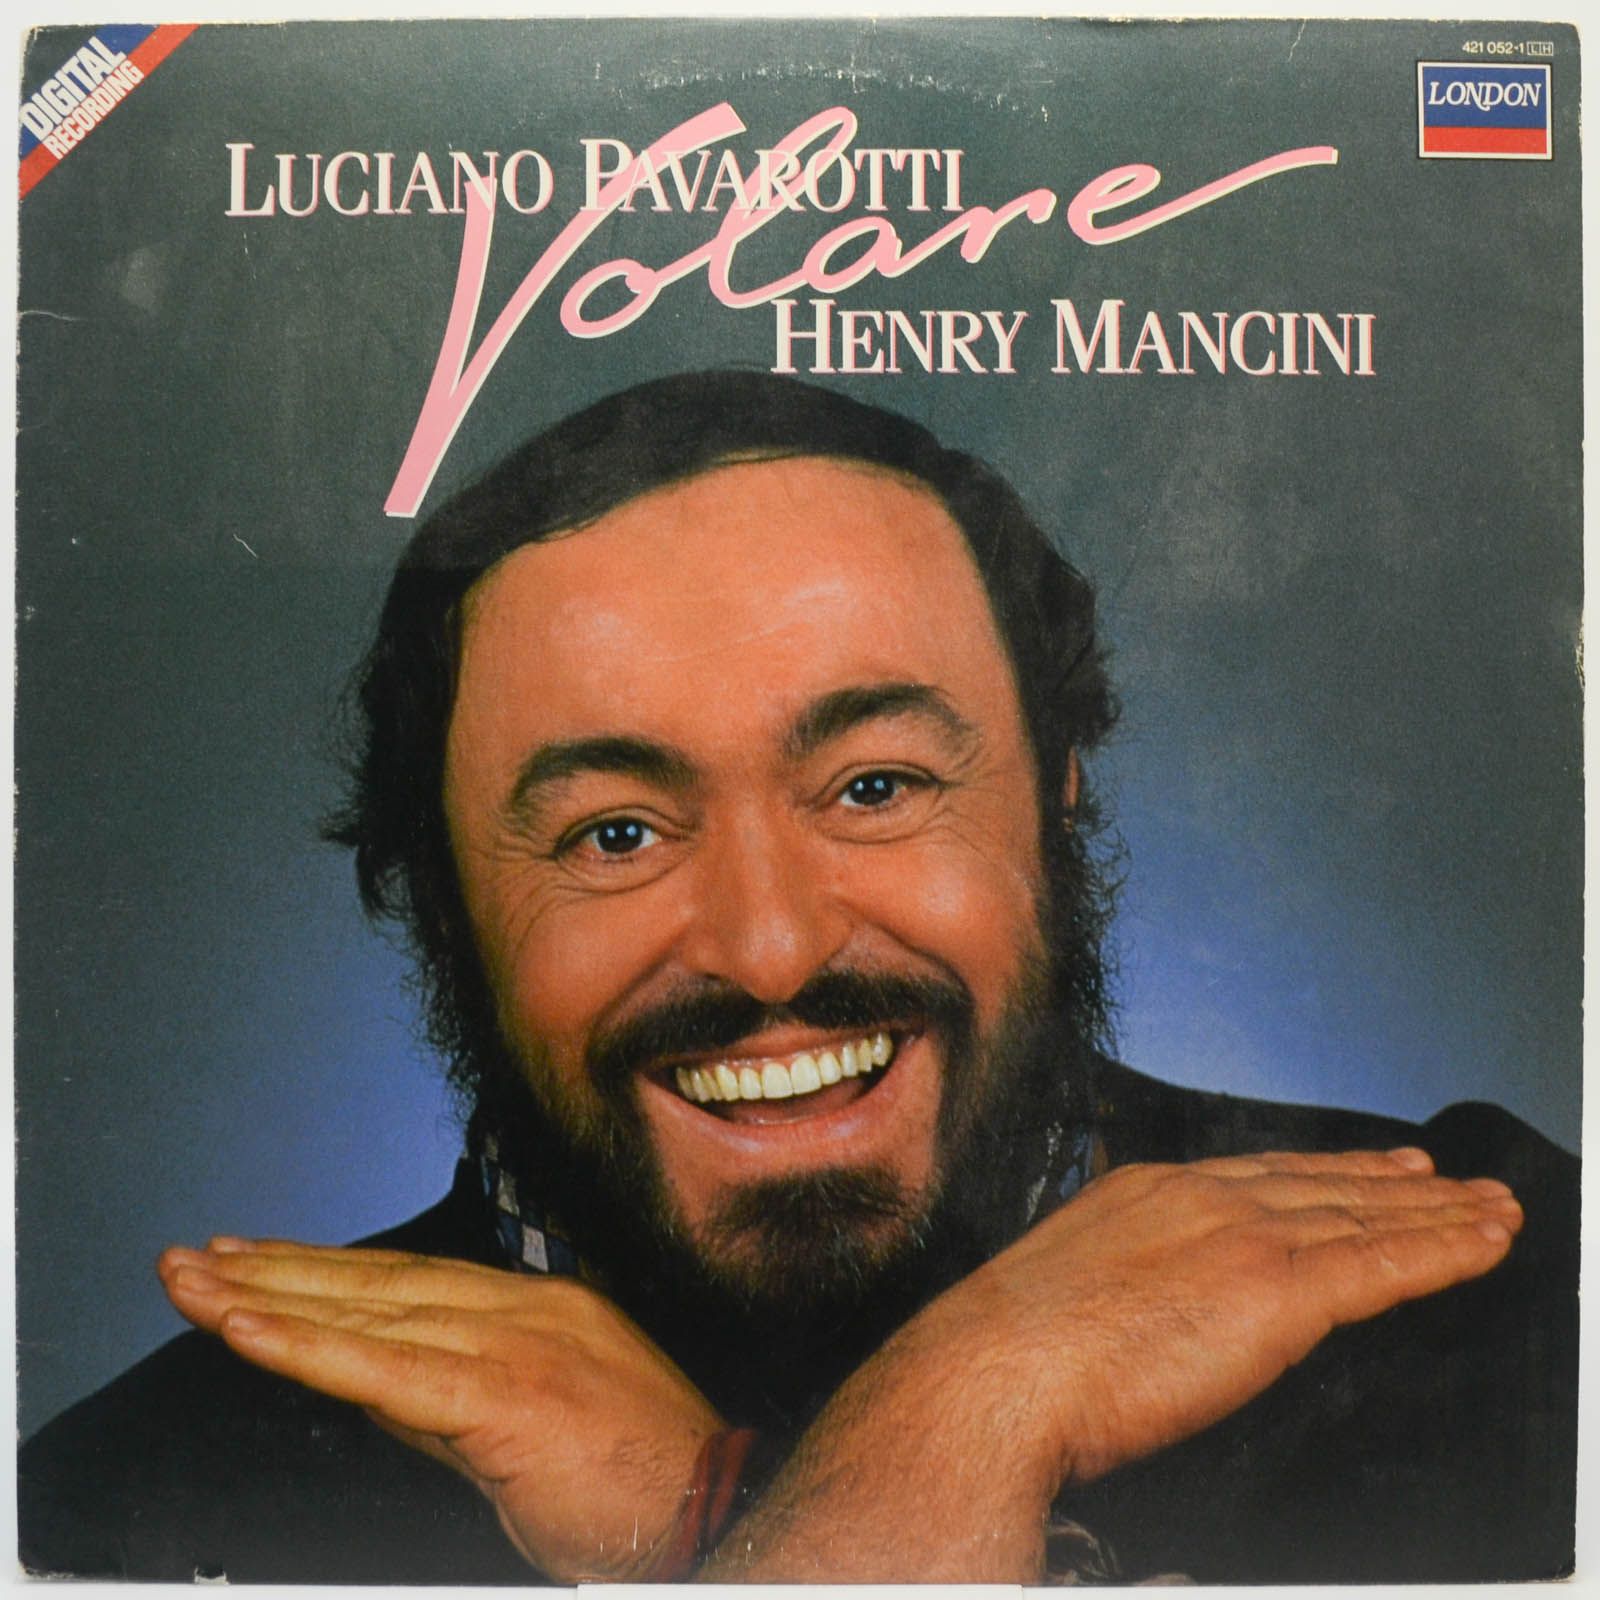 Luciano Pavarotti, Henry Mancini — Volare (USA), 1987